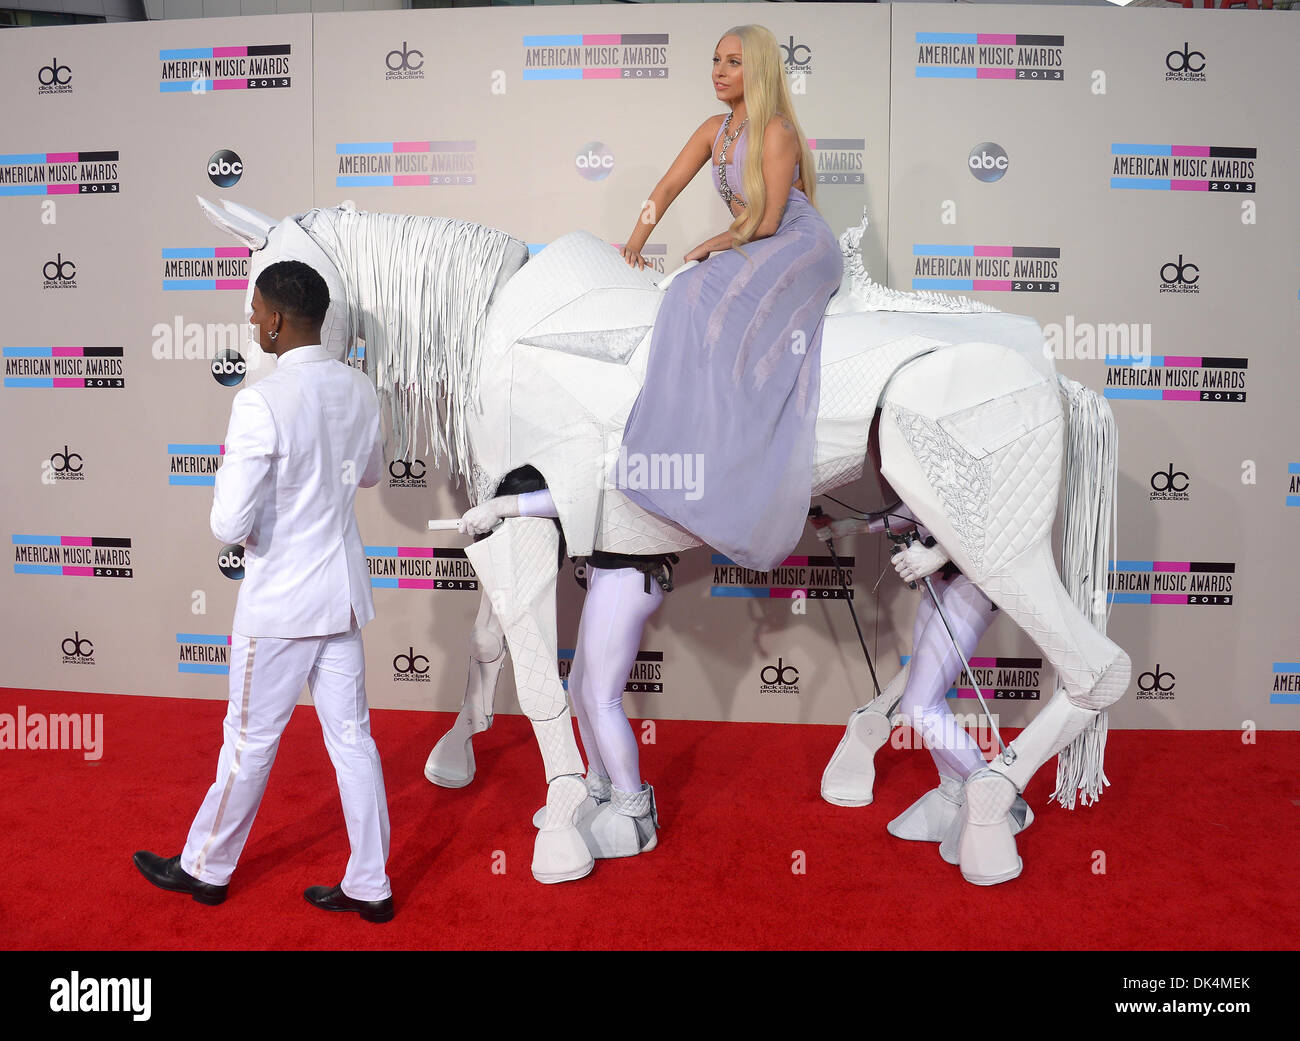 Lady Gaga arrives at the American Music Awards, Los Angeles, America - 24 Nov 2013 Stock Photo